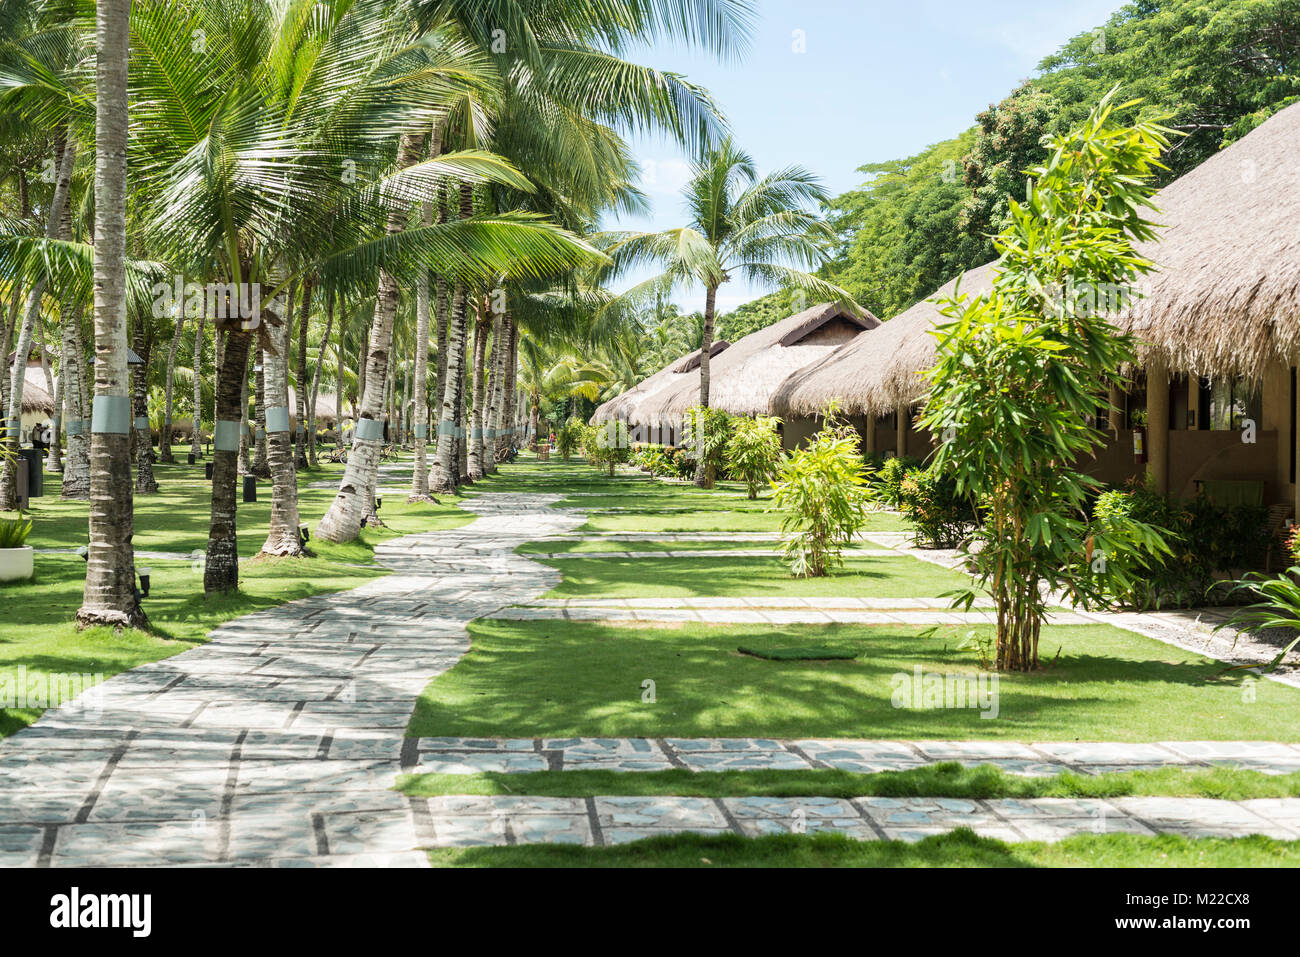 Promenade in a luxury resort in the tropics Stock Photo